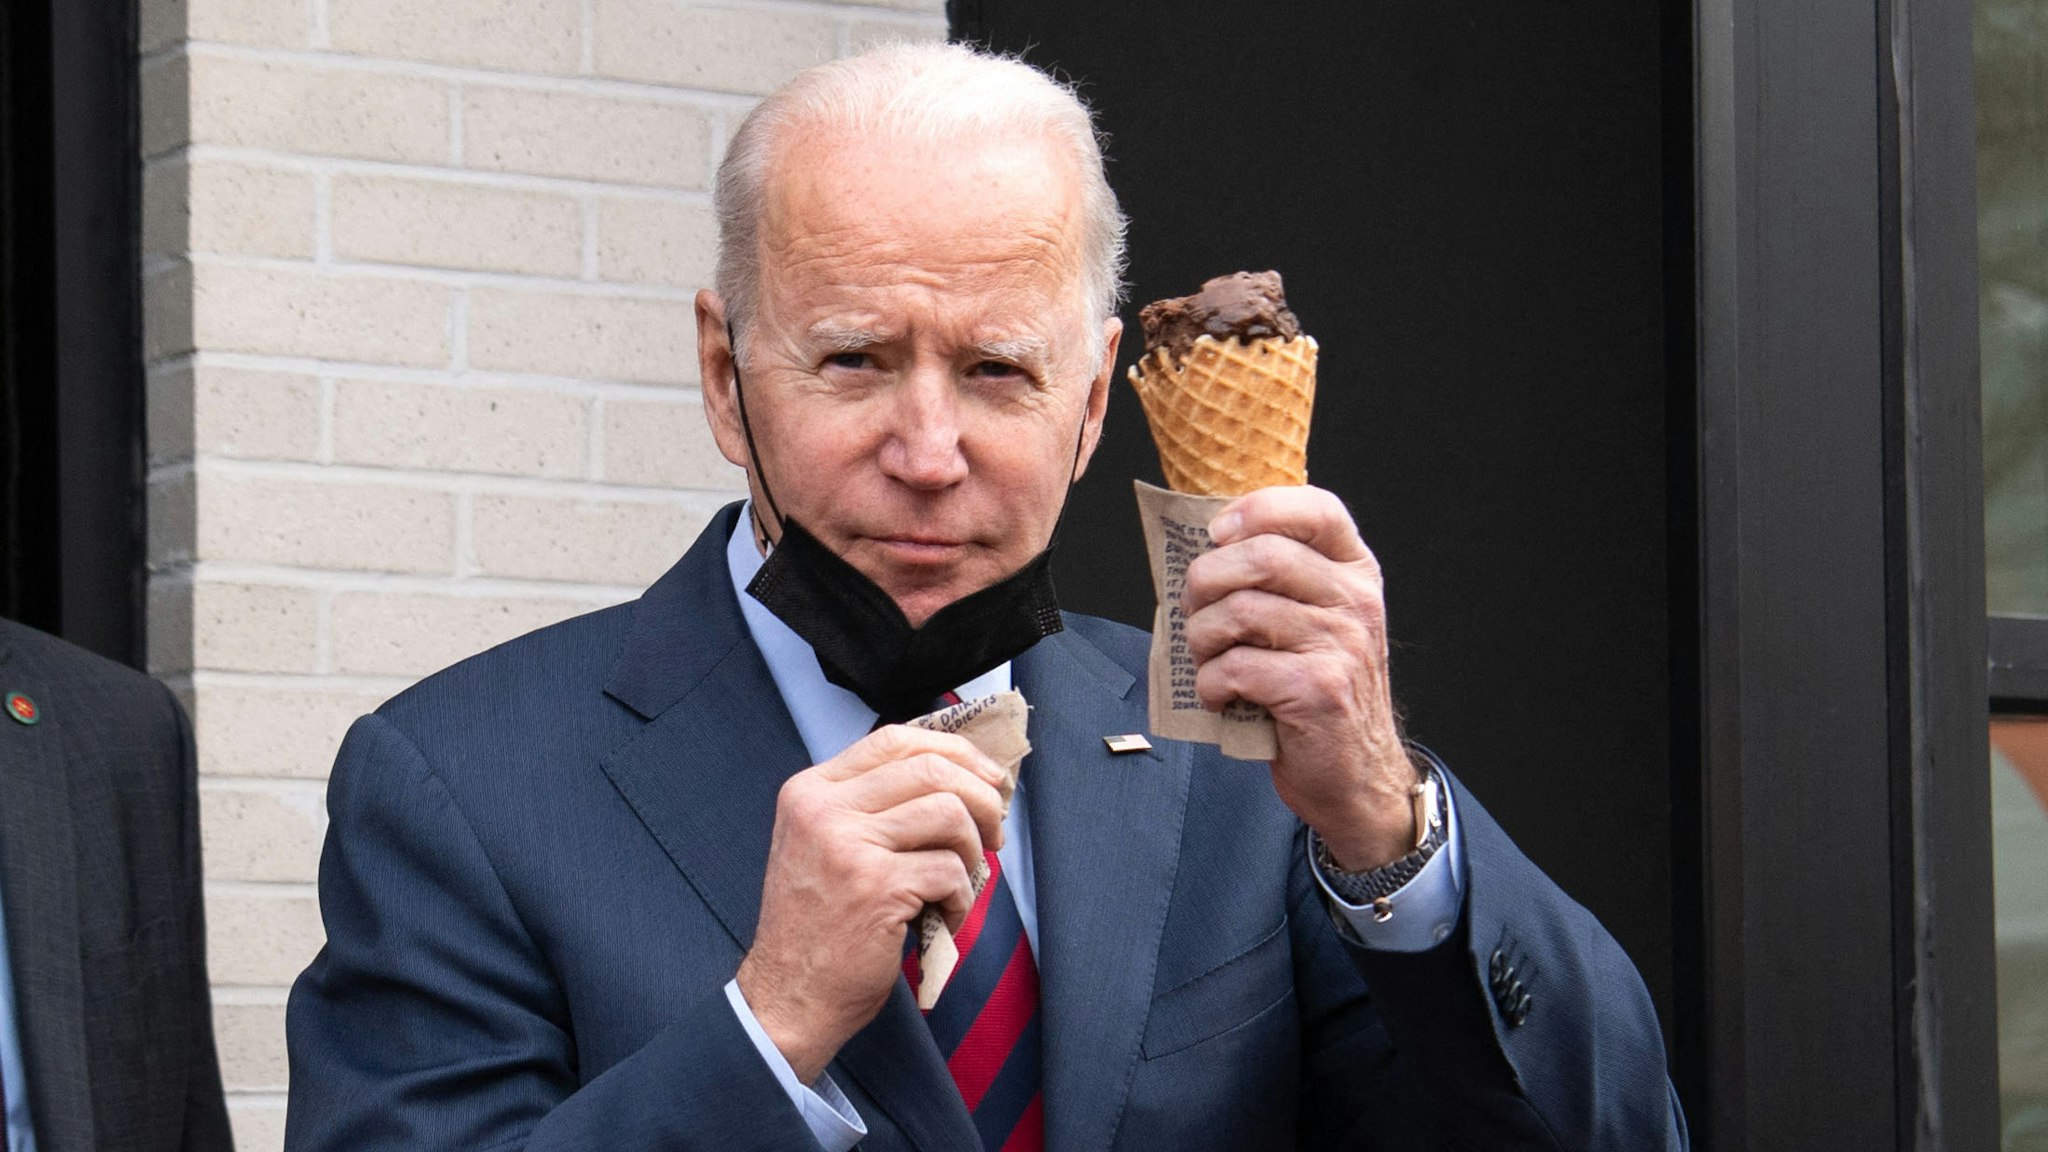 US President Joe Biden carries an ice cream cone as he leaves Jeni's Ice Cream in Washington, DC, on January 25, 2022.